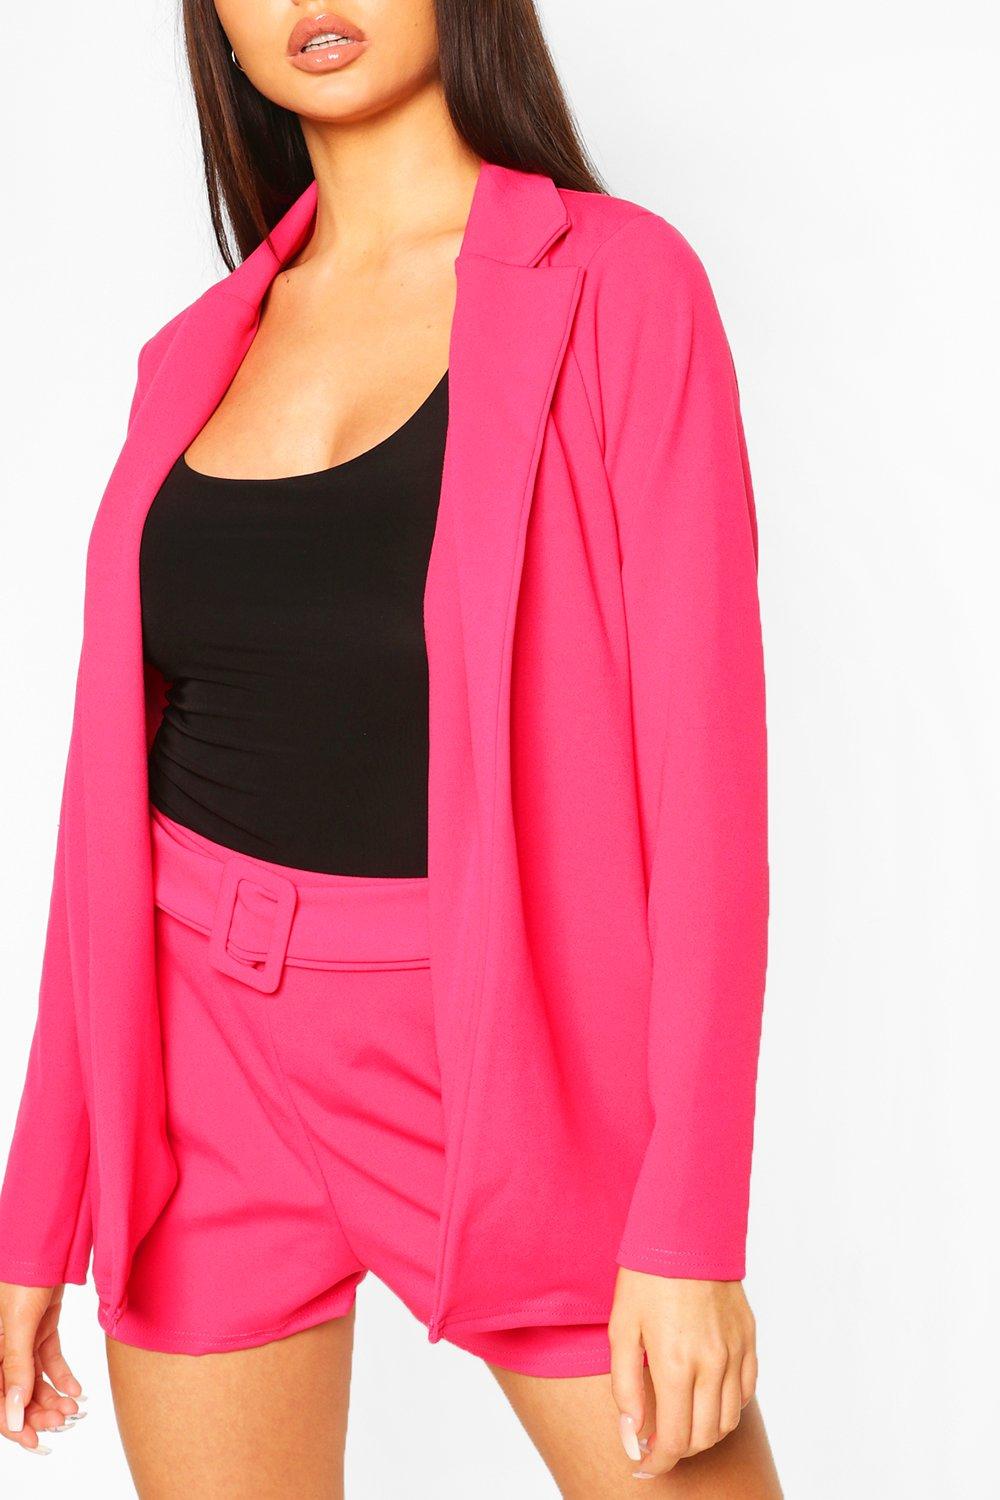 boohoo Women's Blazer And Self Fabric Belt Short Suit Set|Size: 8|hot pink